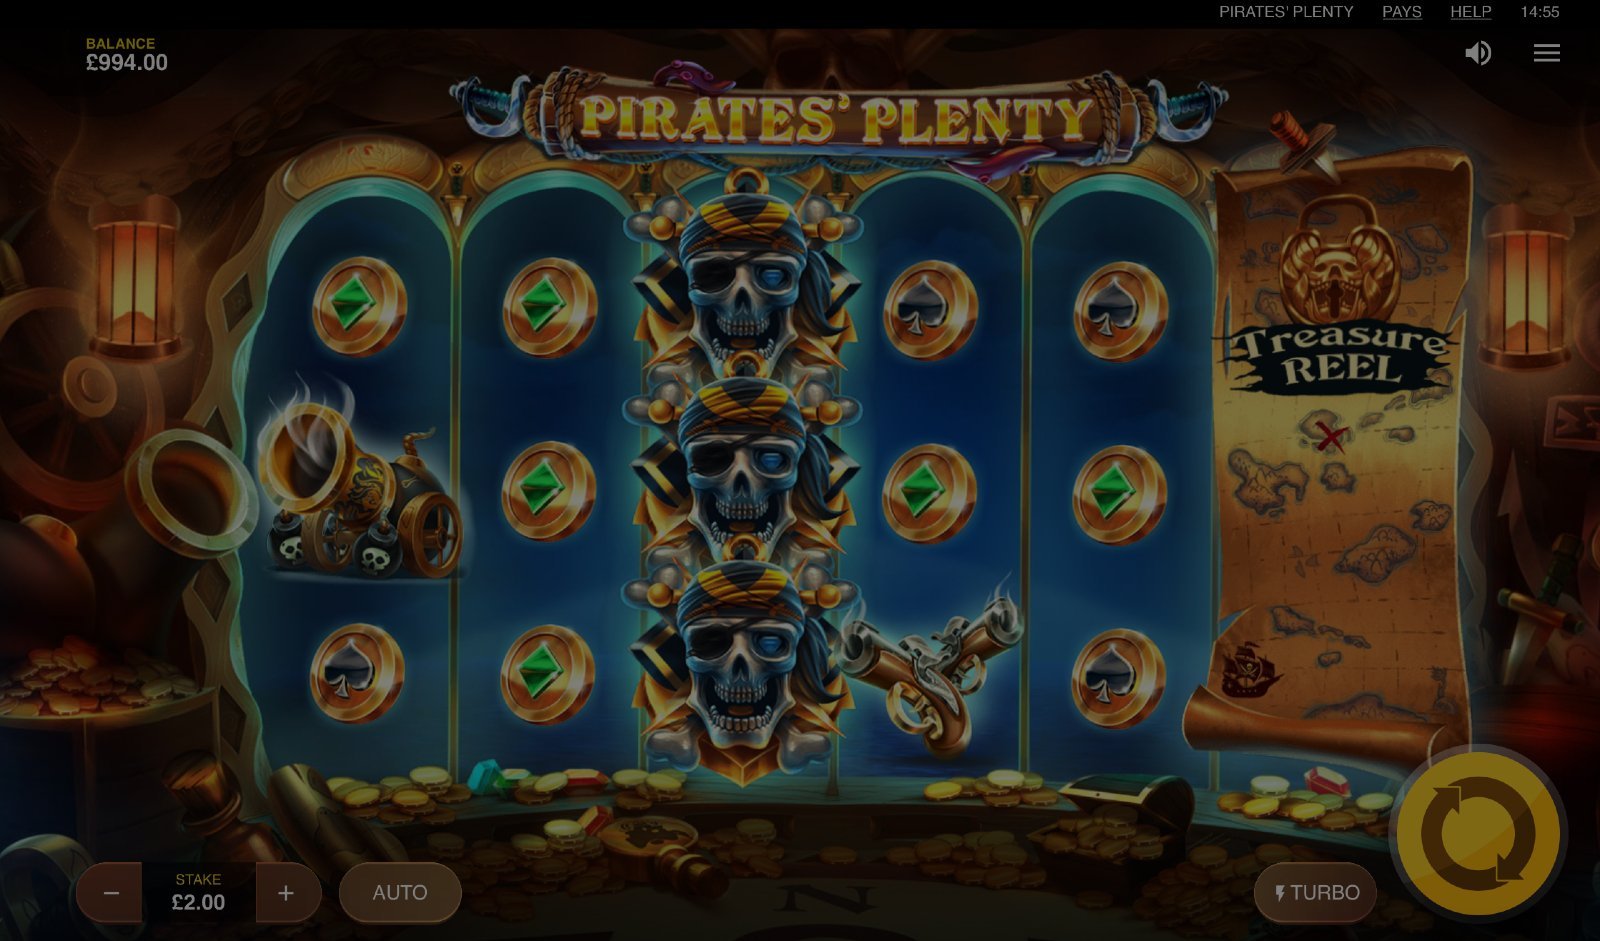 Pirates’ Plenty The Sunken Treasure demo